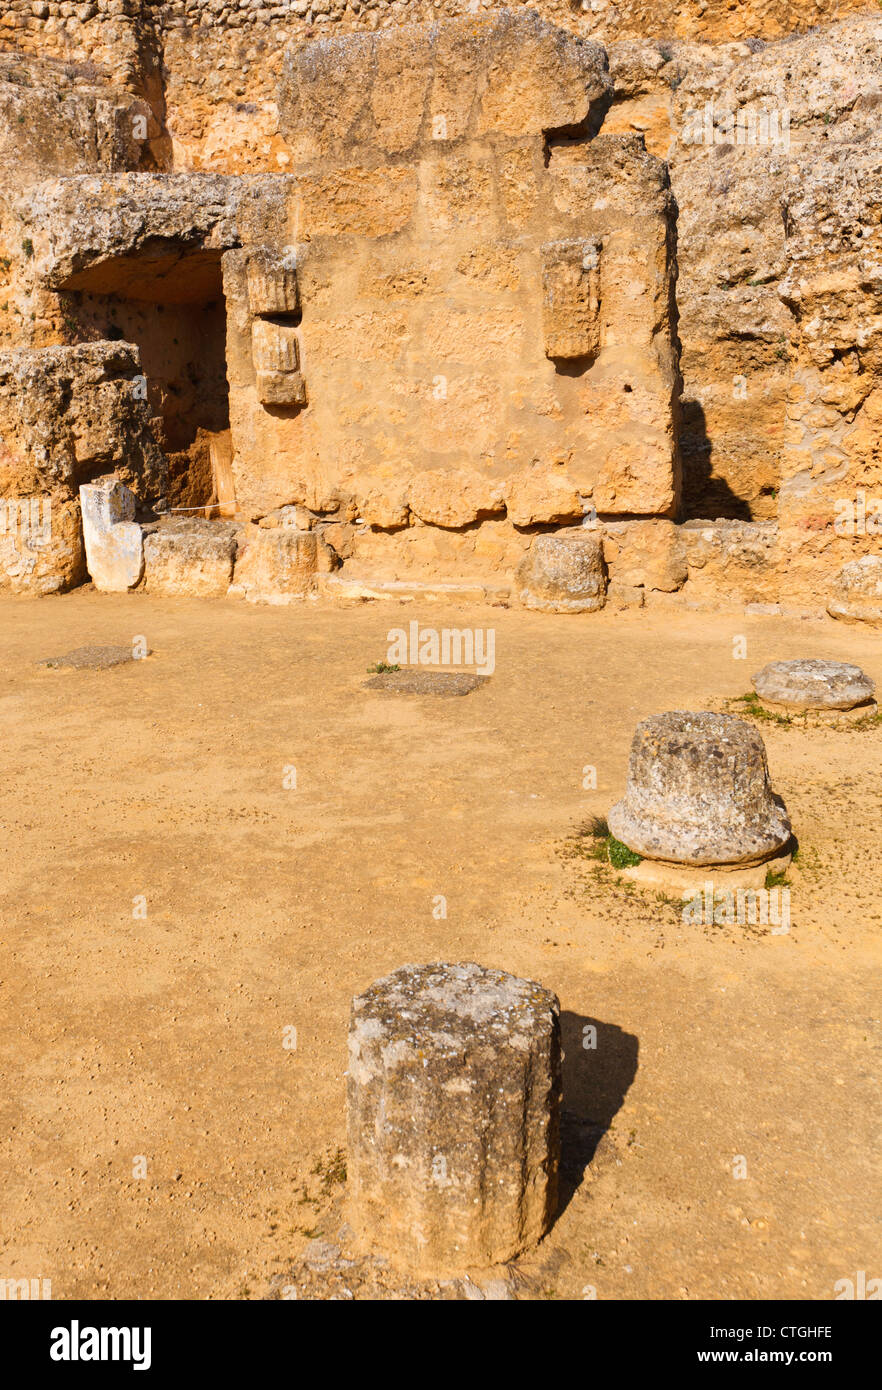 Der archäologische Komplex, Carmona, Provinz Sevilla, Spanien. Tumba de Servilia, das Grab von Servilia. Stockfoto